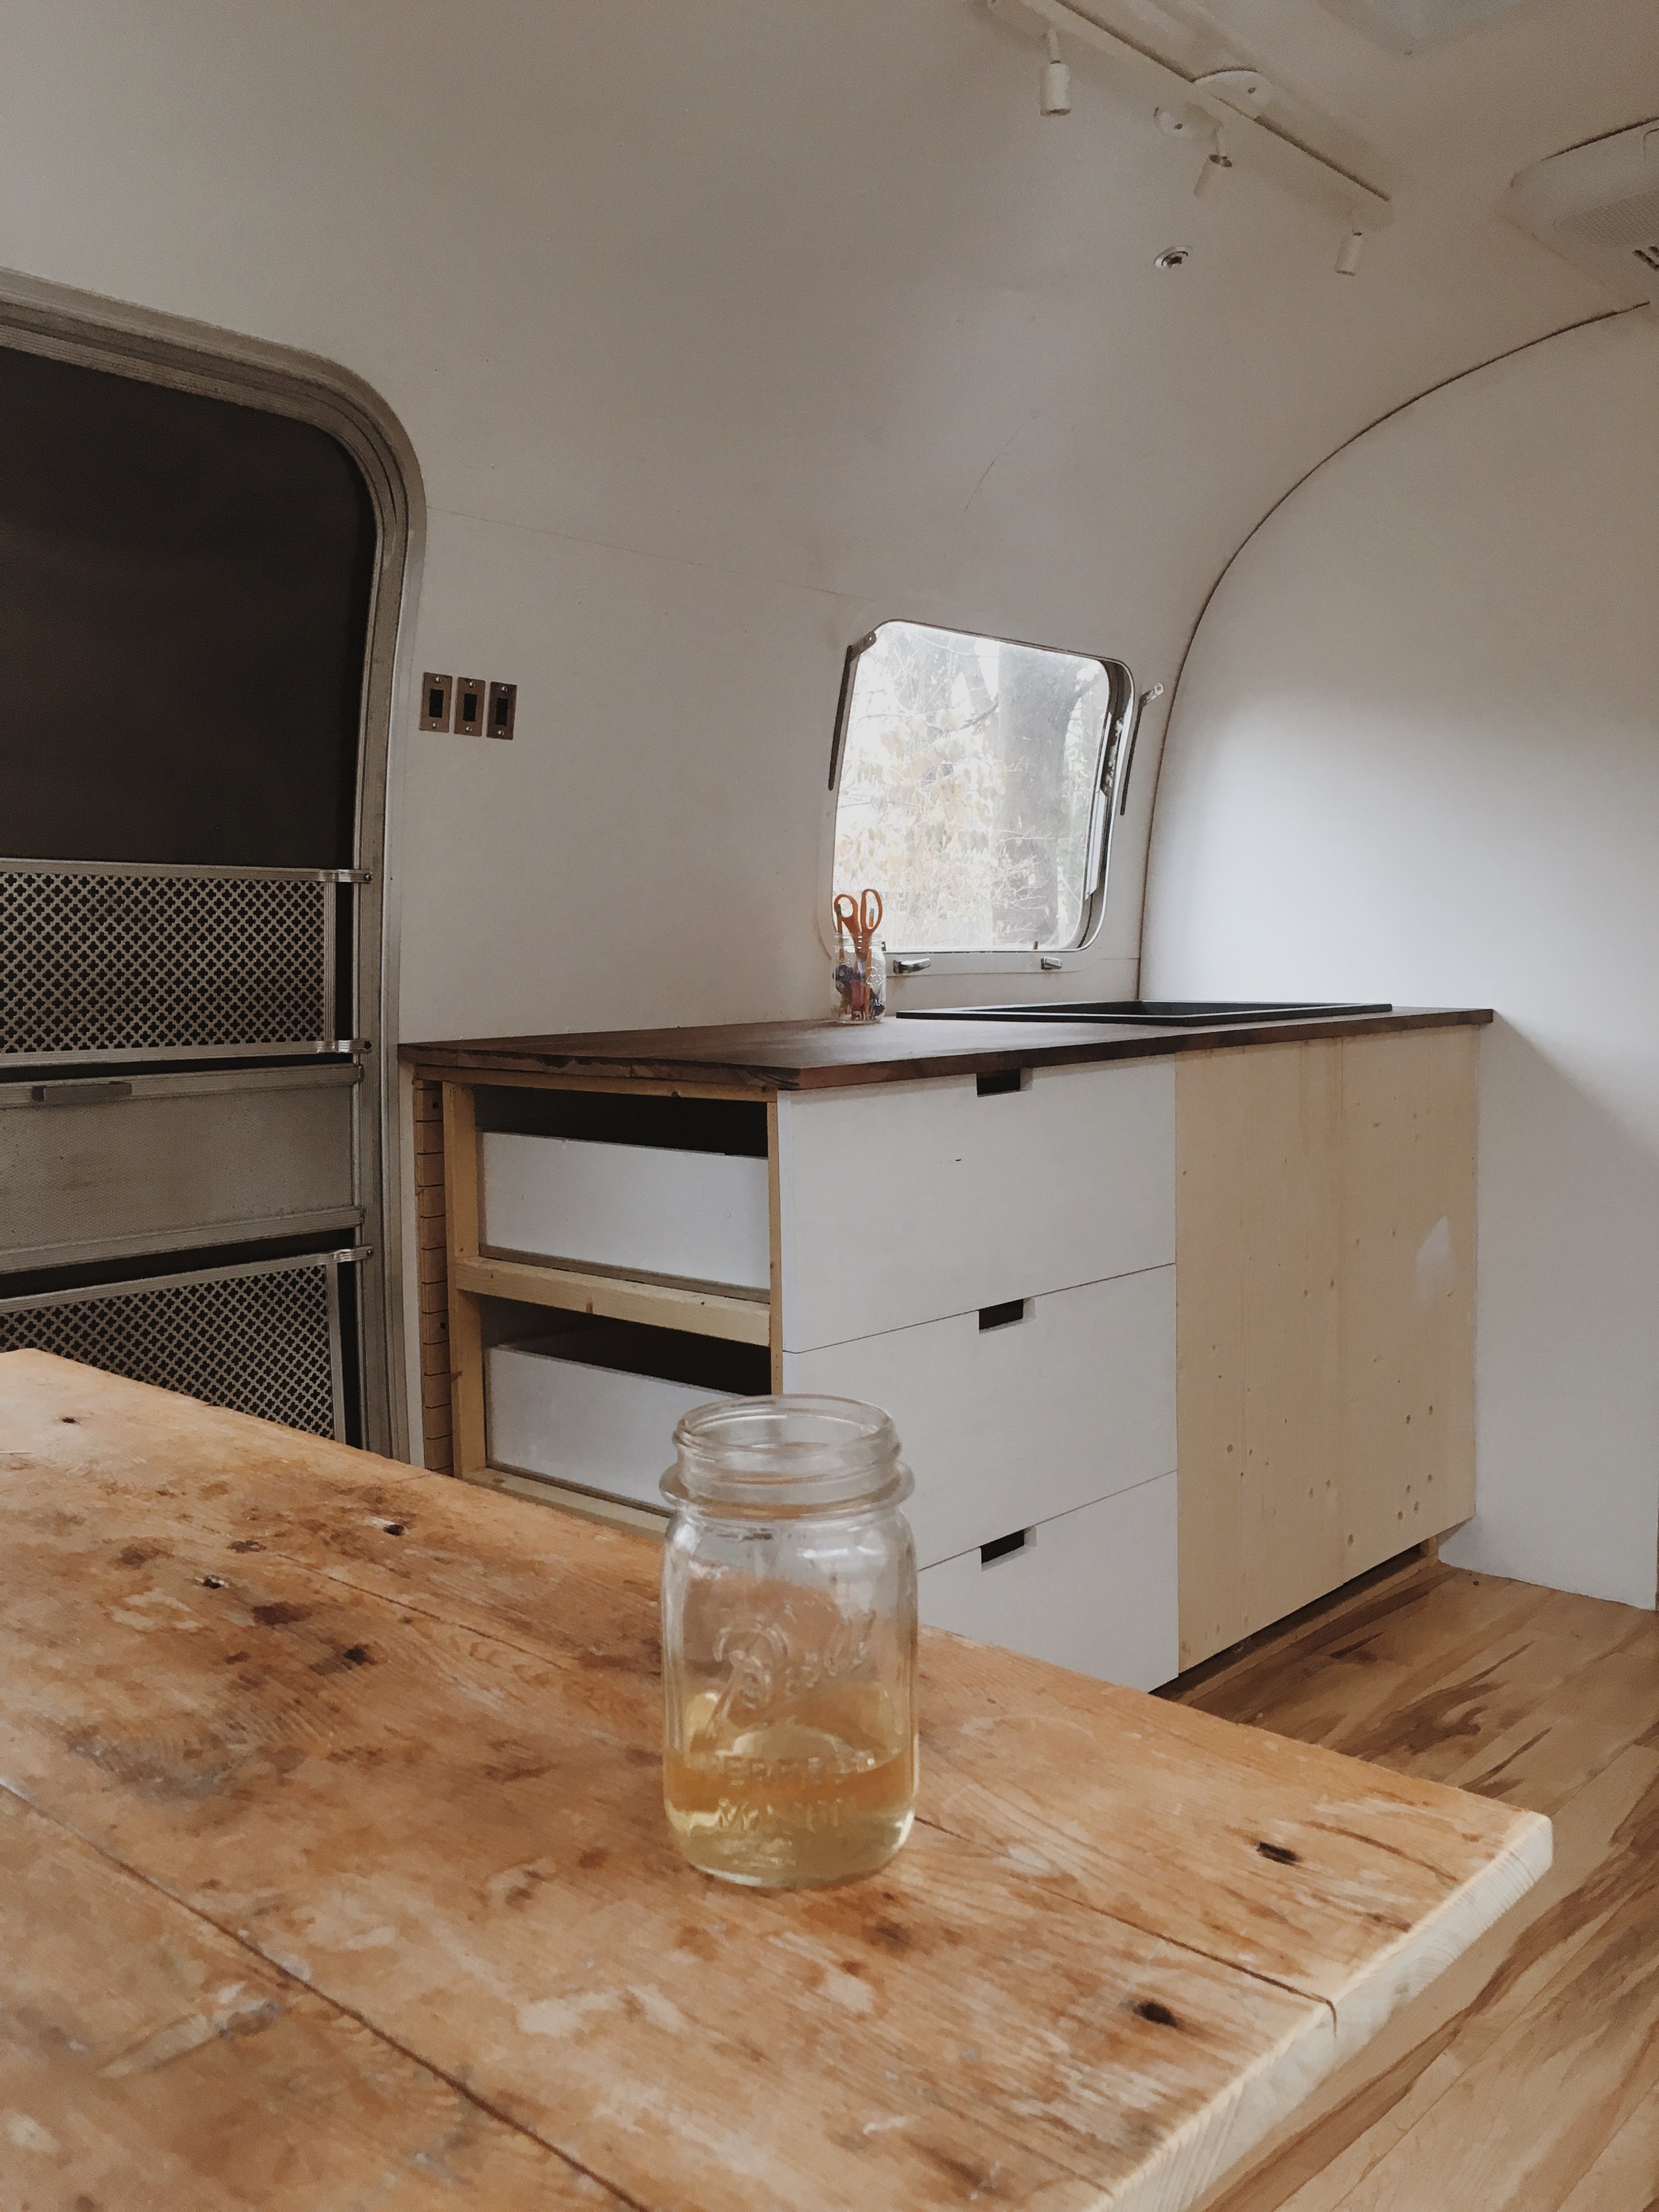 Organizing Ideas - Airstream, RV, Homes on Wheels | The Kitchn